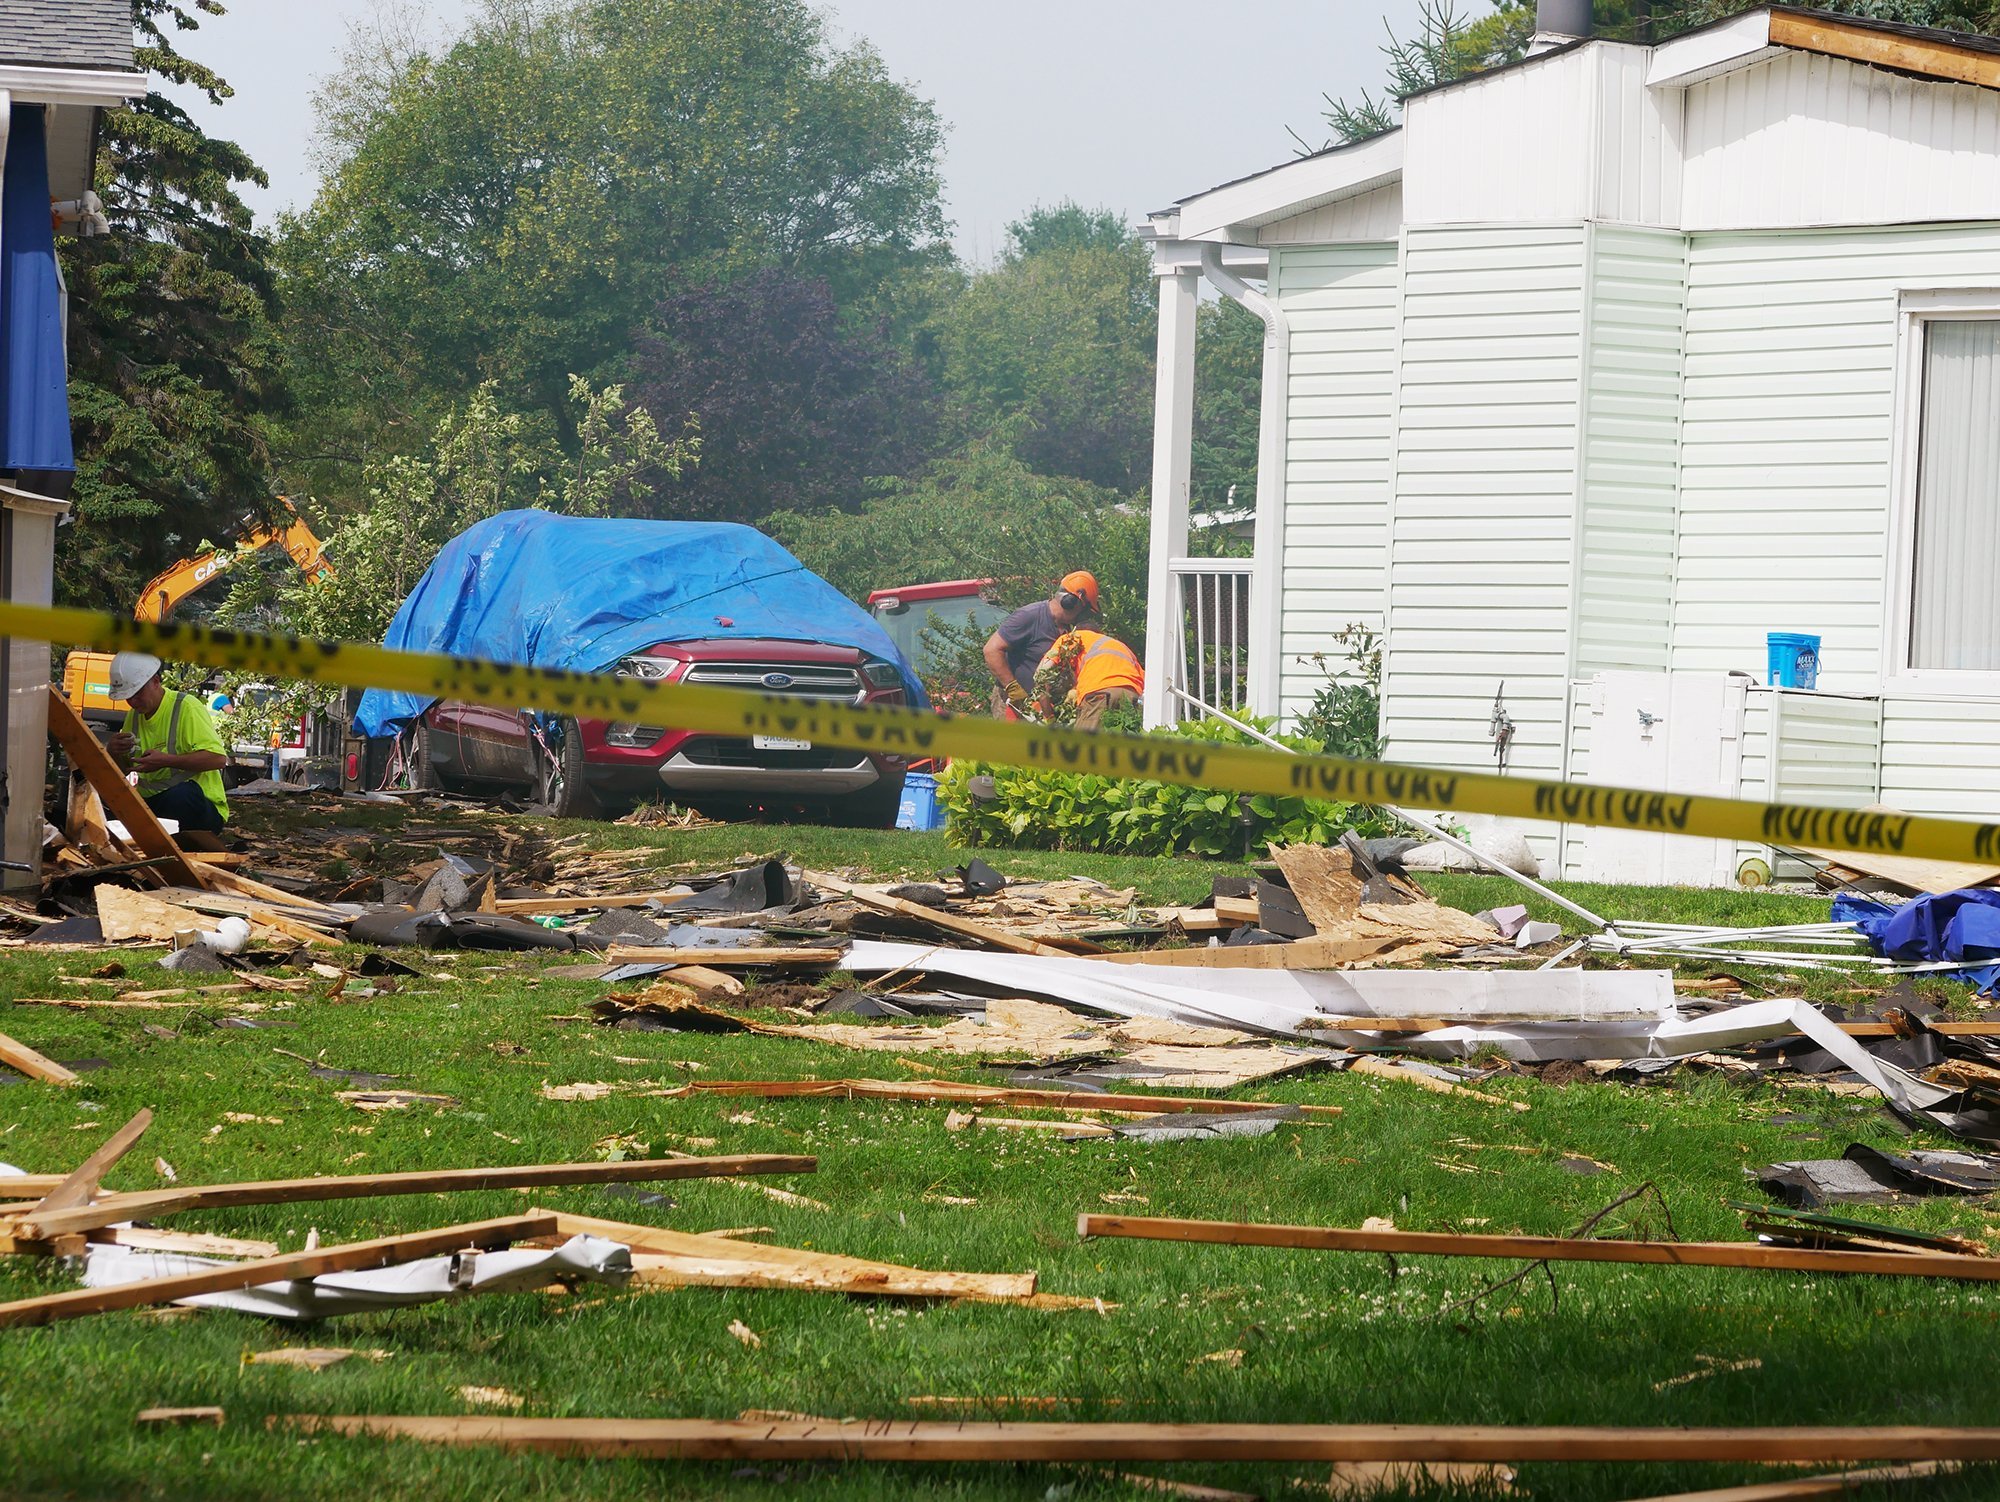 'It’s just shocking, it’s heartbreaking': Premier surveys damage after tornado hits Barrie